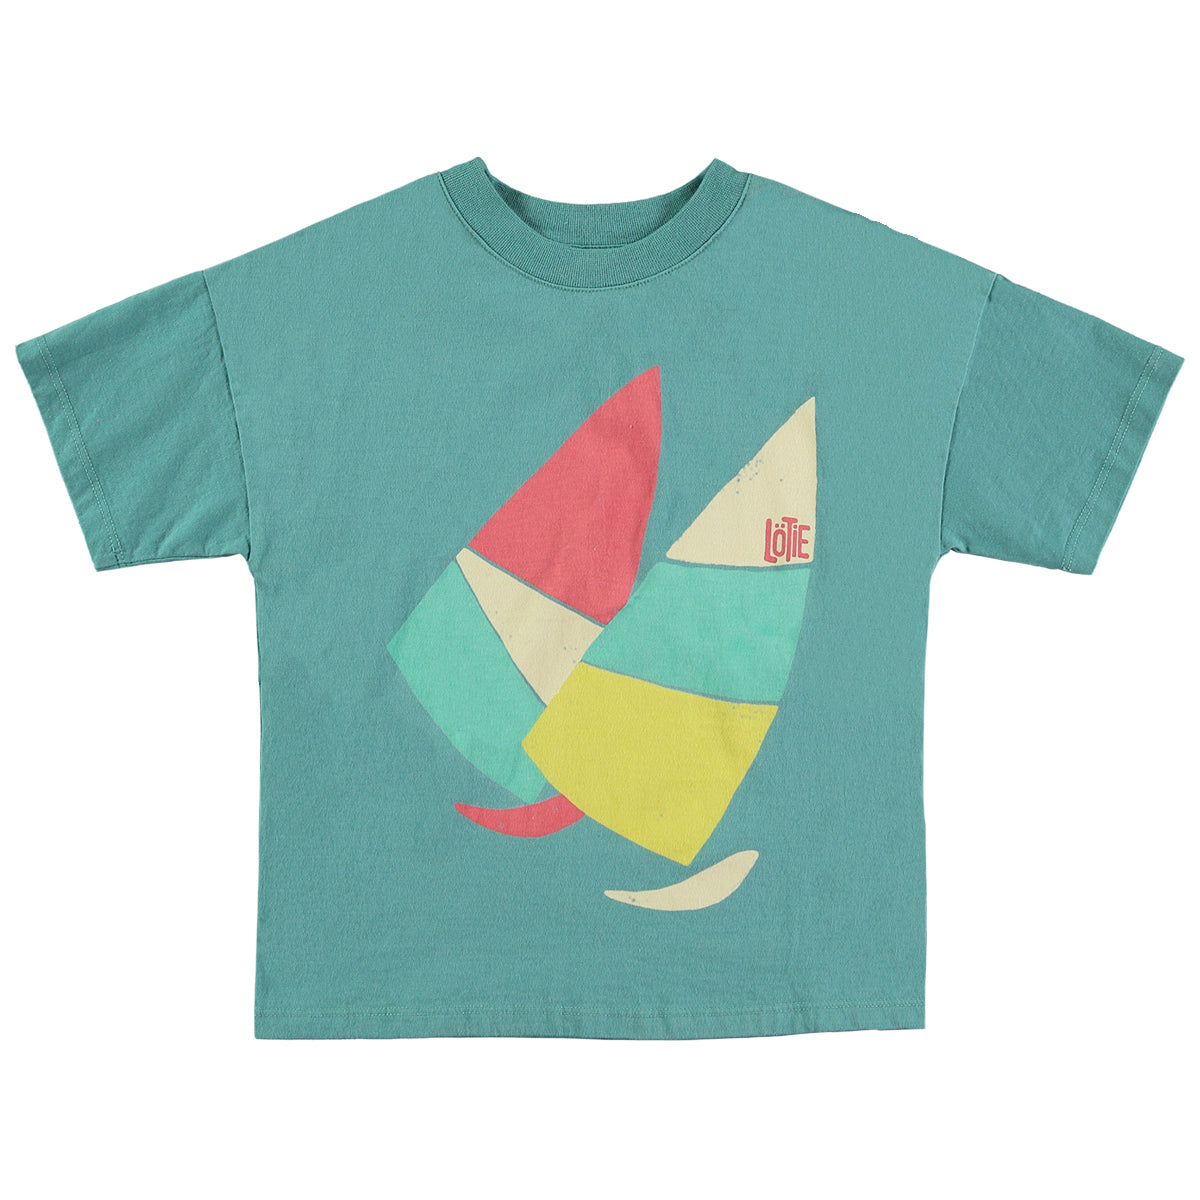 Lotie Kids - wide fit t-shirt - windsurf - pacific